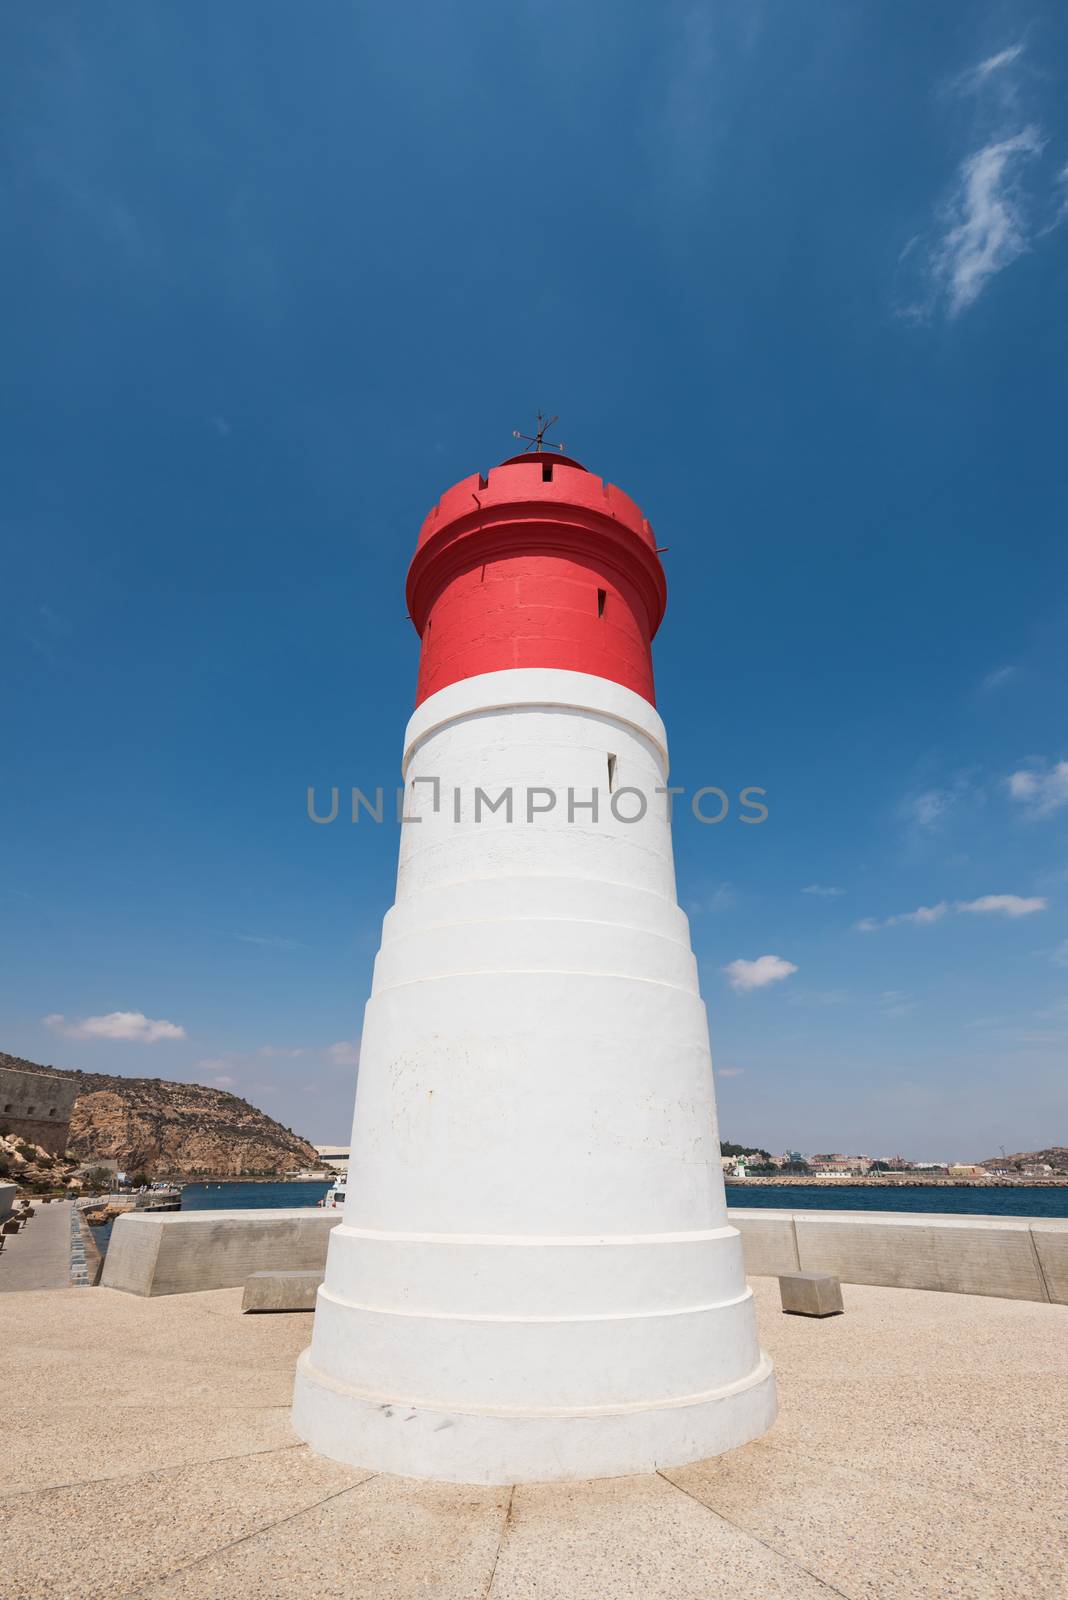 Christmas Lighthouse in Cartagena harbor, Murcia, Spain. by HERRAEZ